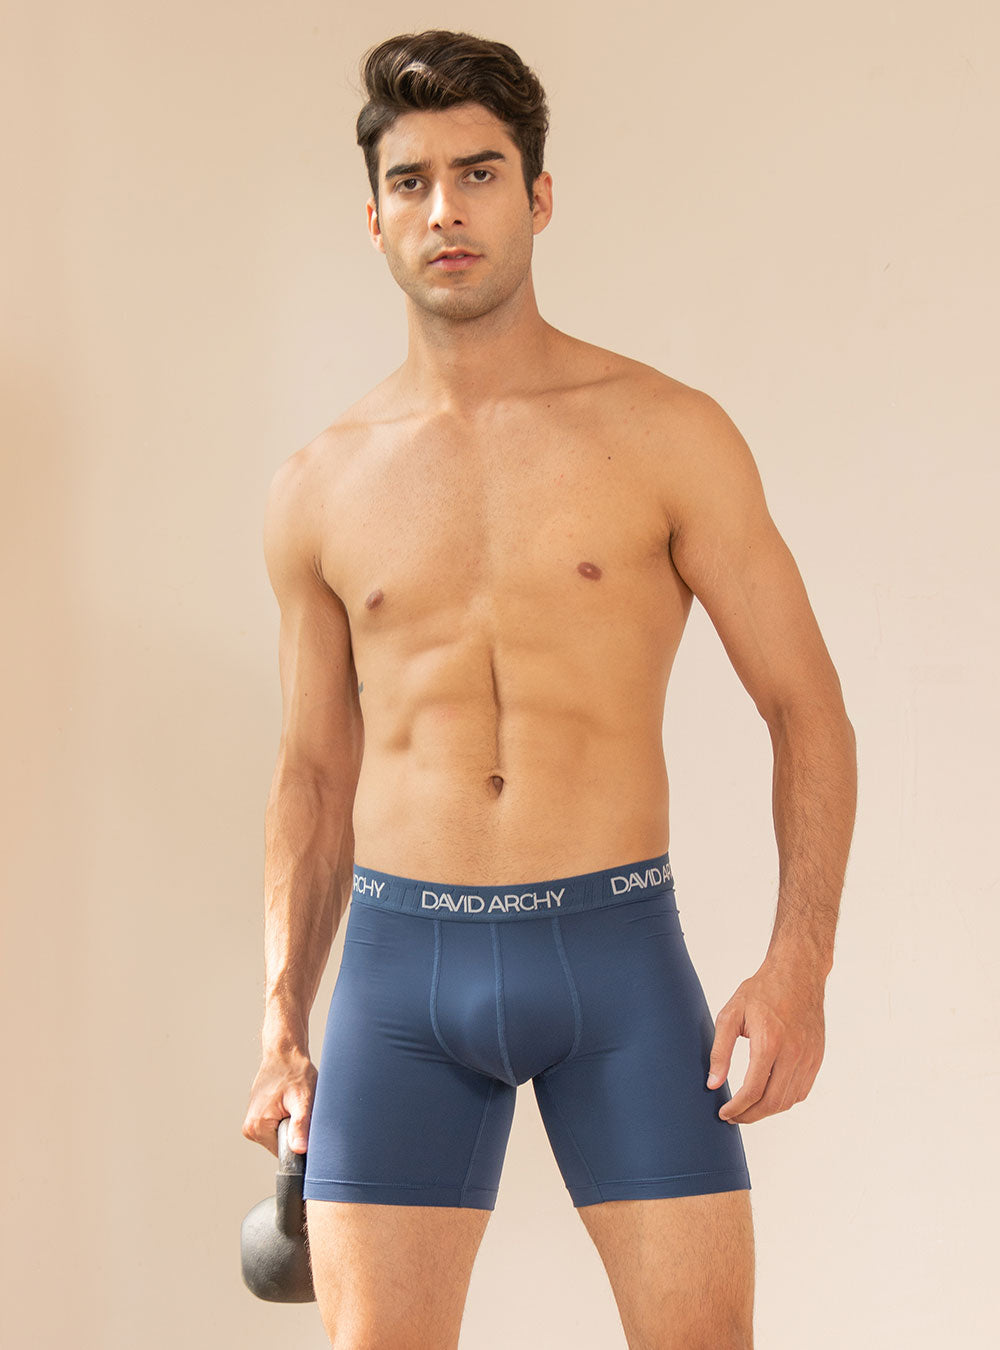 Plus Size Men's Briefs Underwear Thermal Boxers Sport Shorts